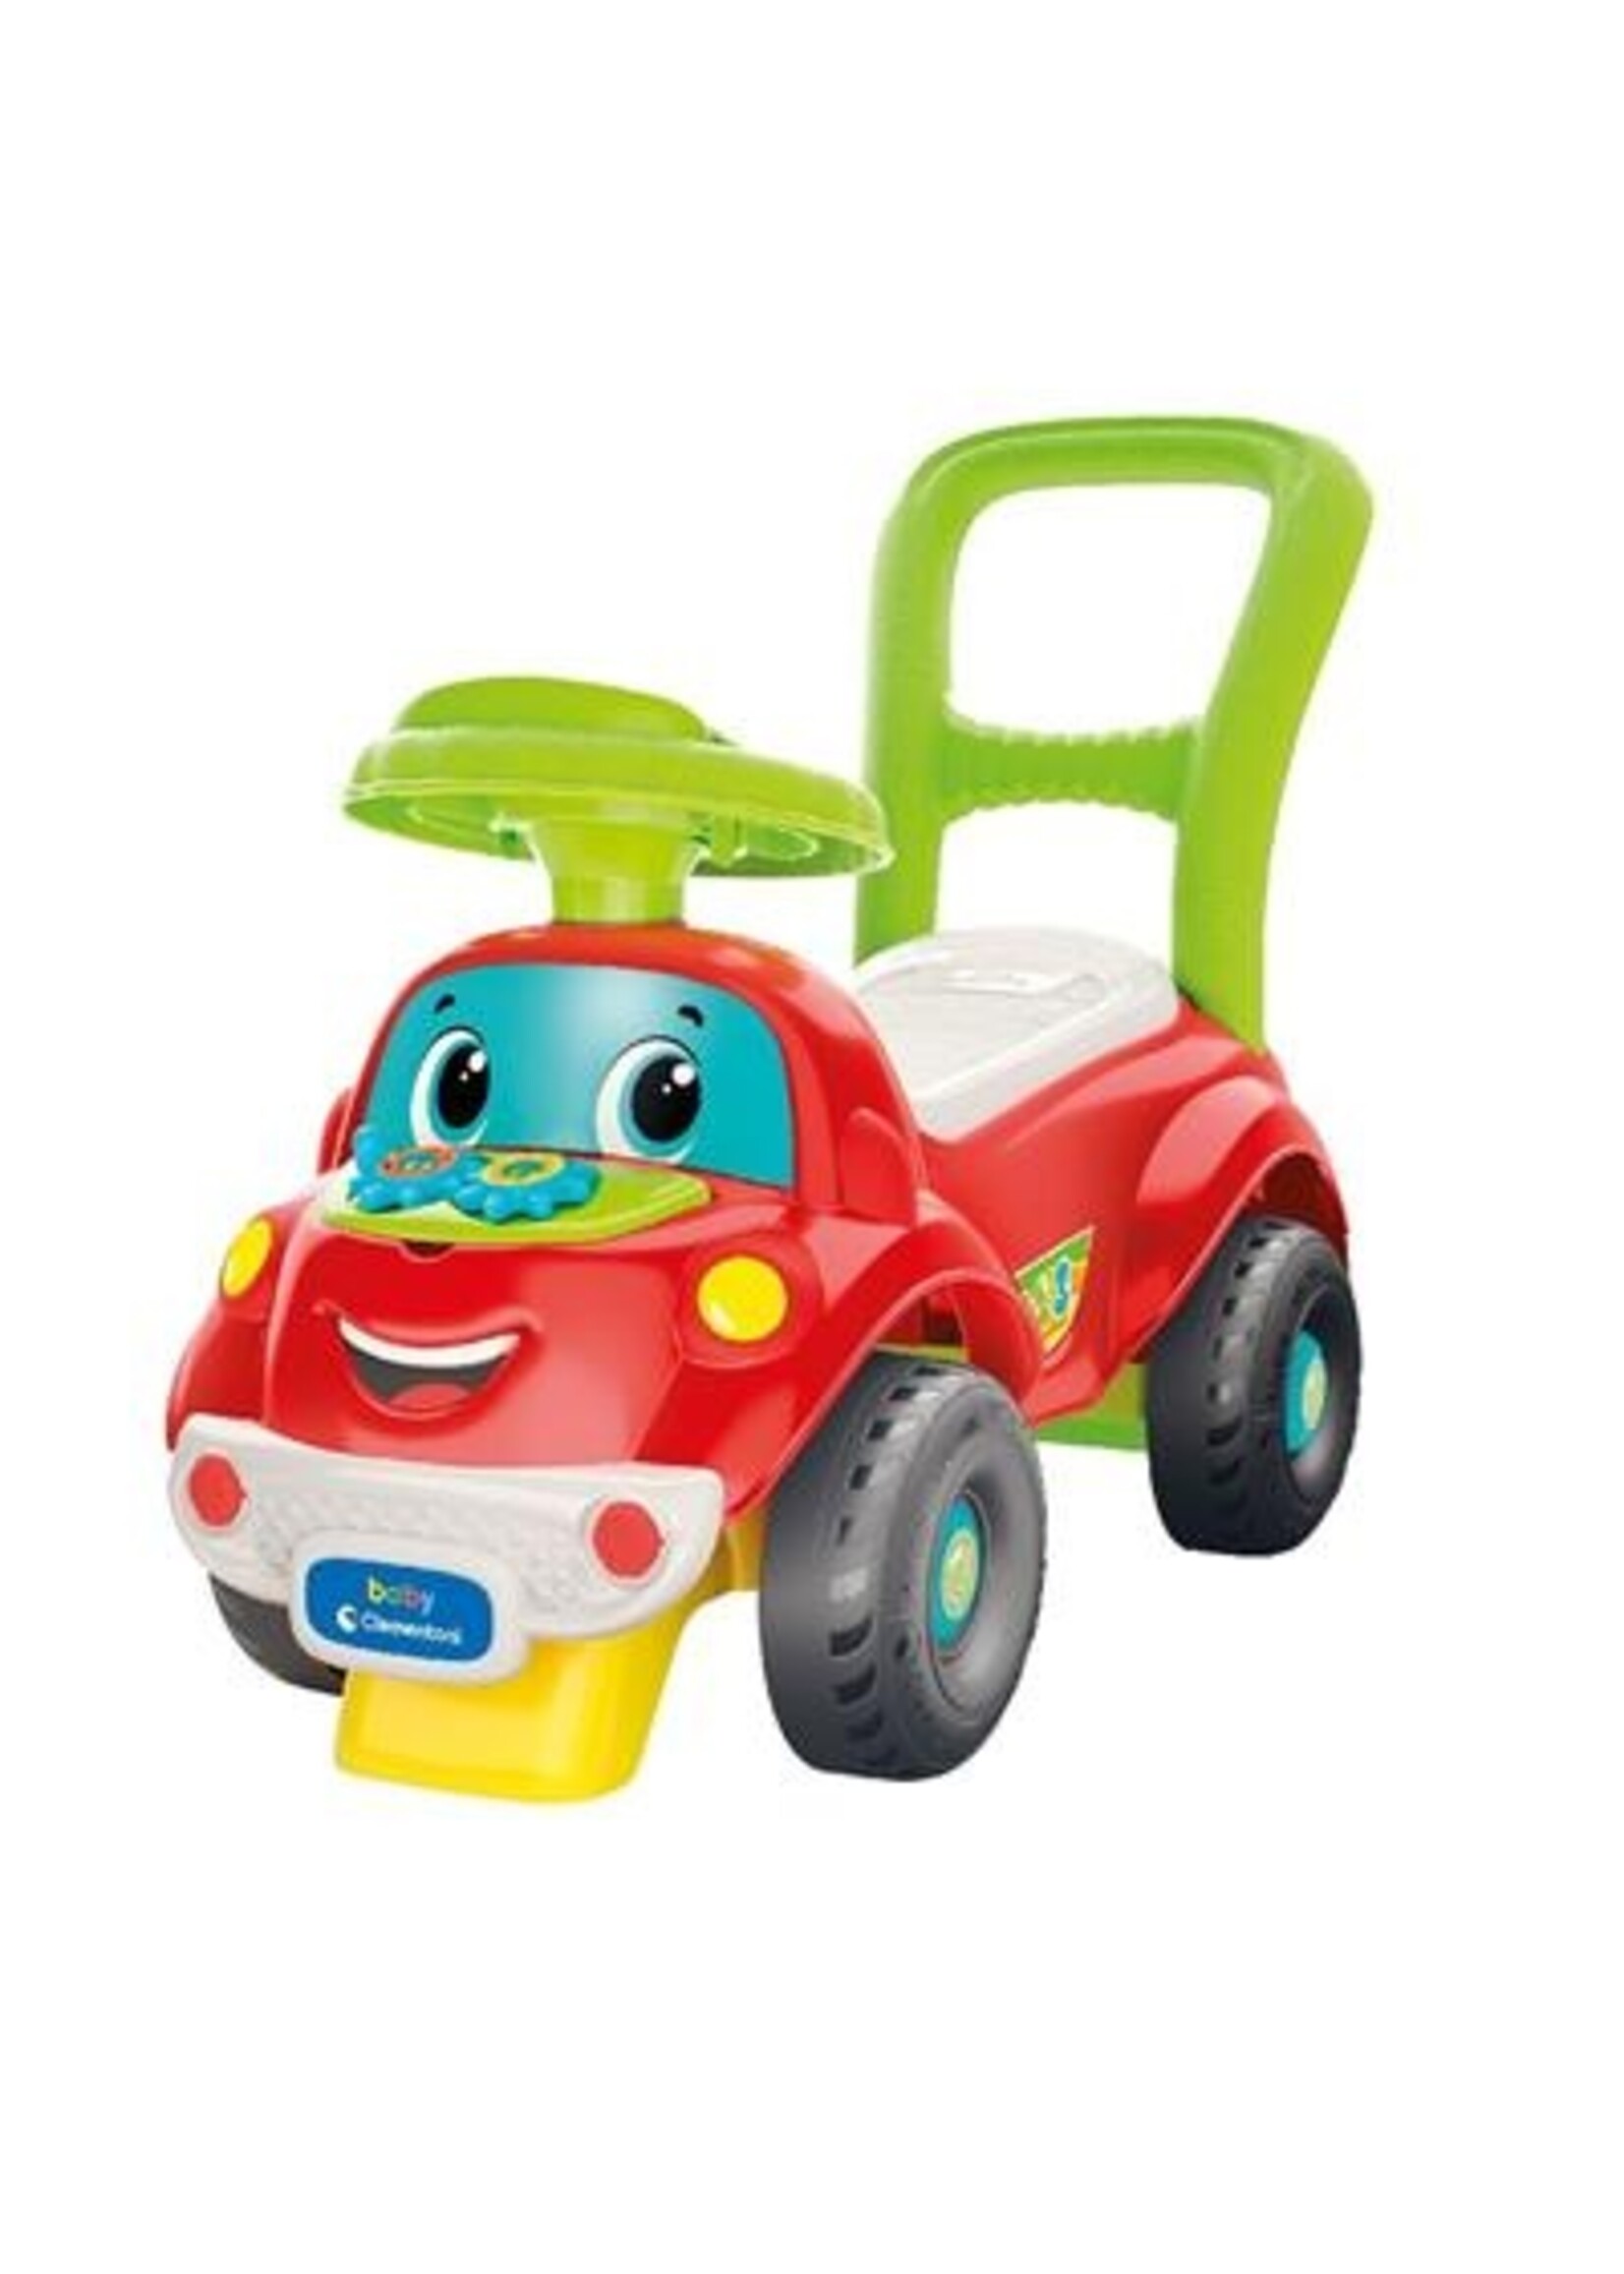 Clementoni Clementoni Baby Ride-On Car